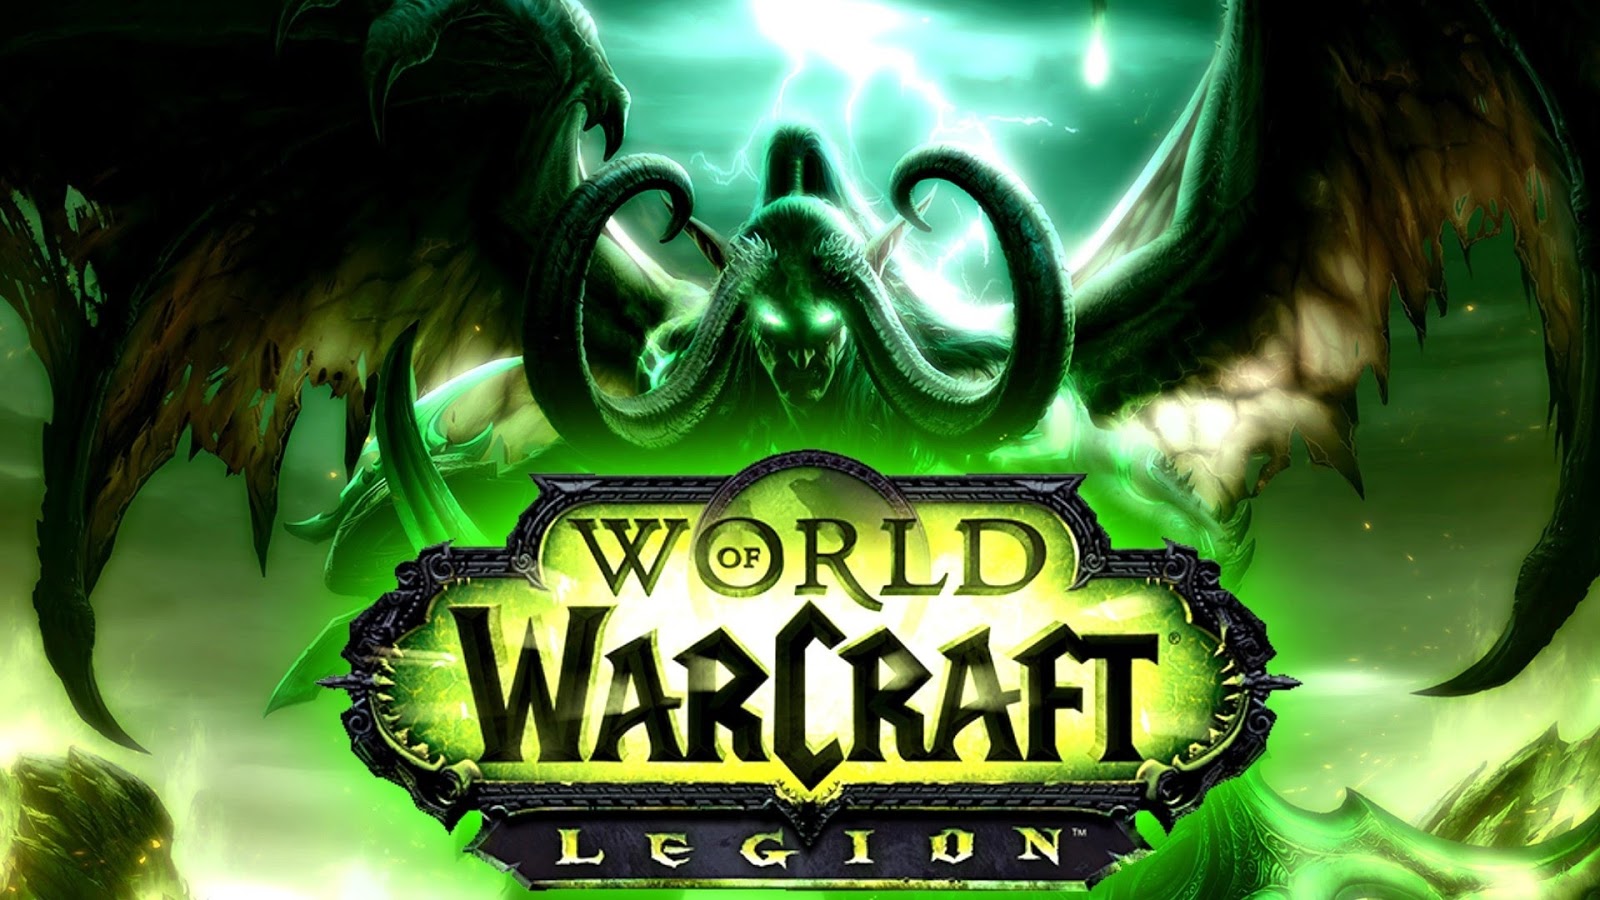 world of warcraft 7.3.5.26972 download